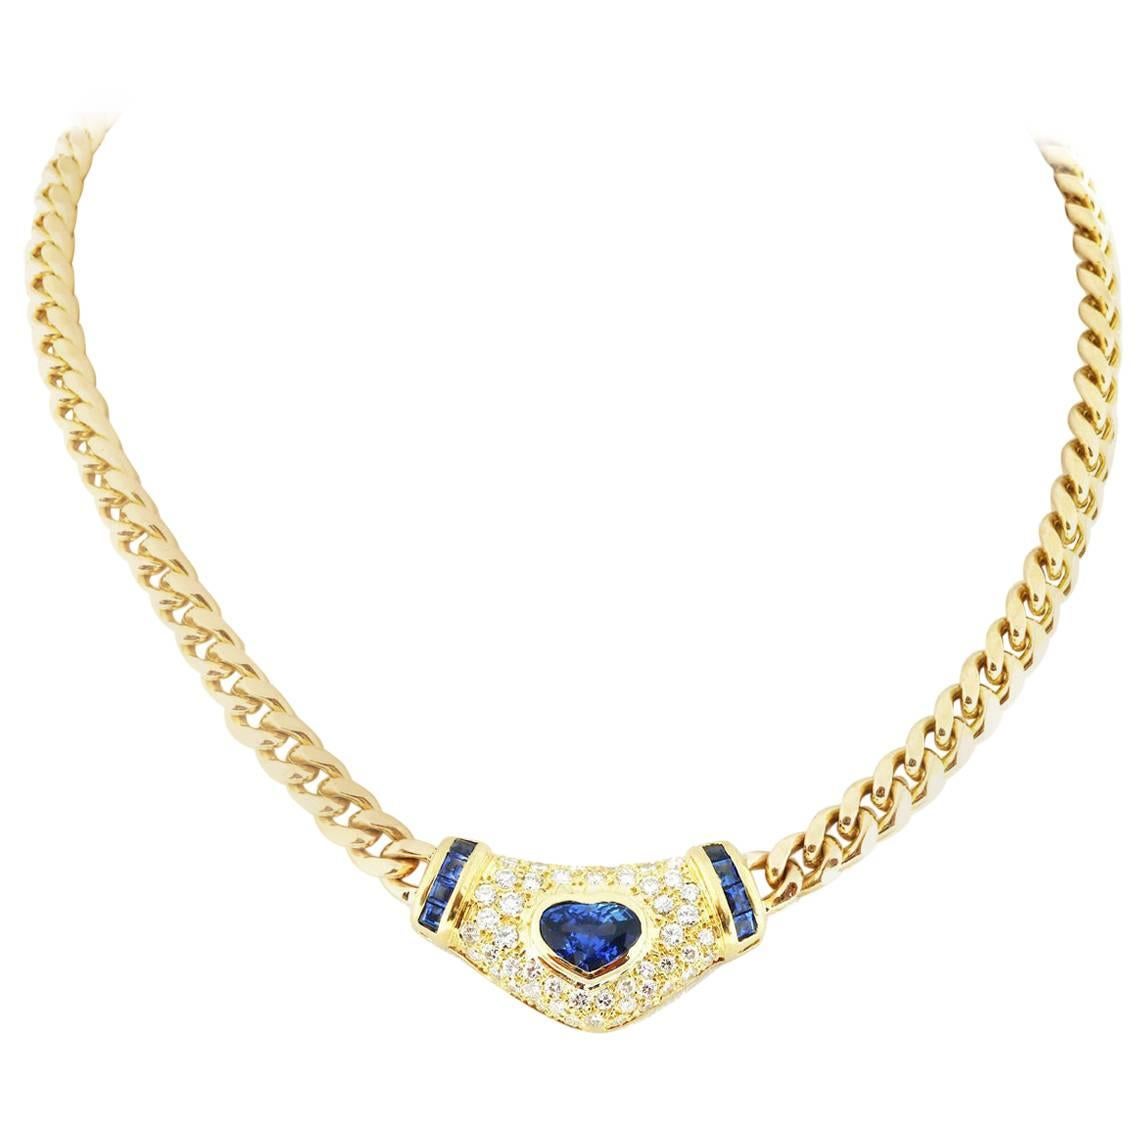 3.37 Carat Heart Shaped Sapphire Diamond Yellow Gold Necklace